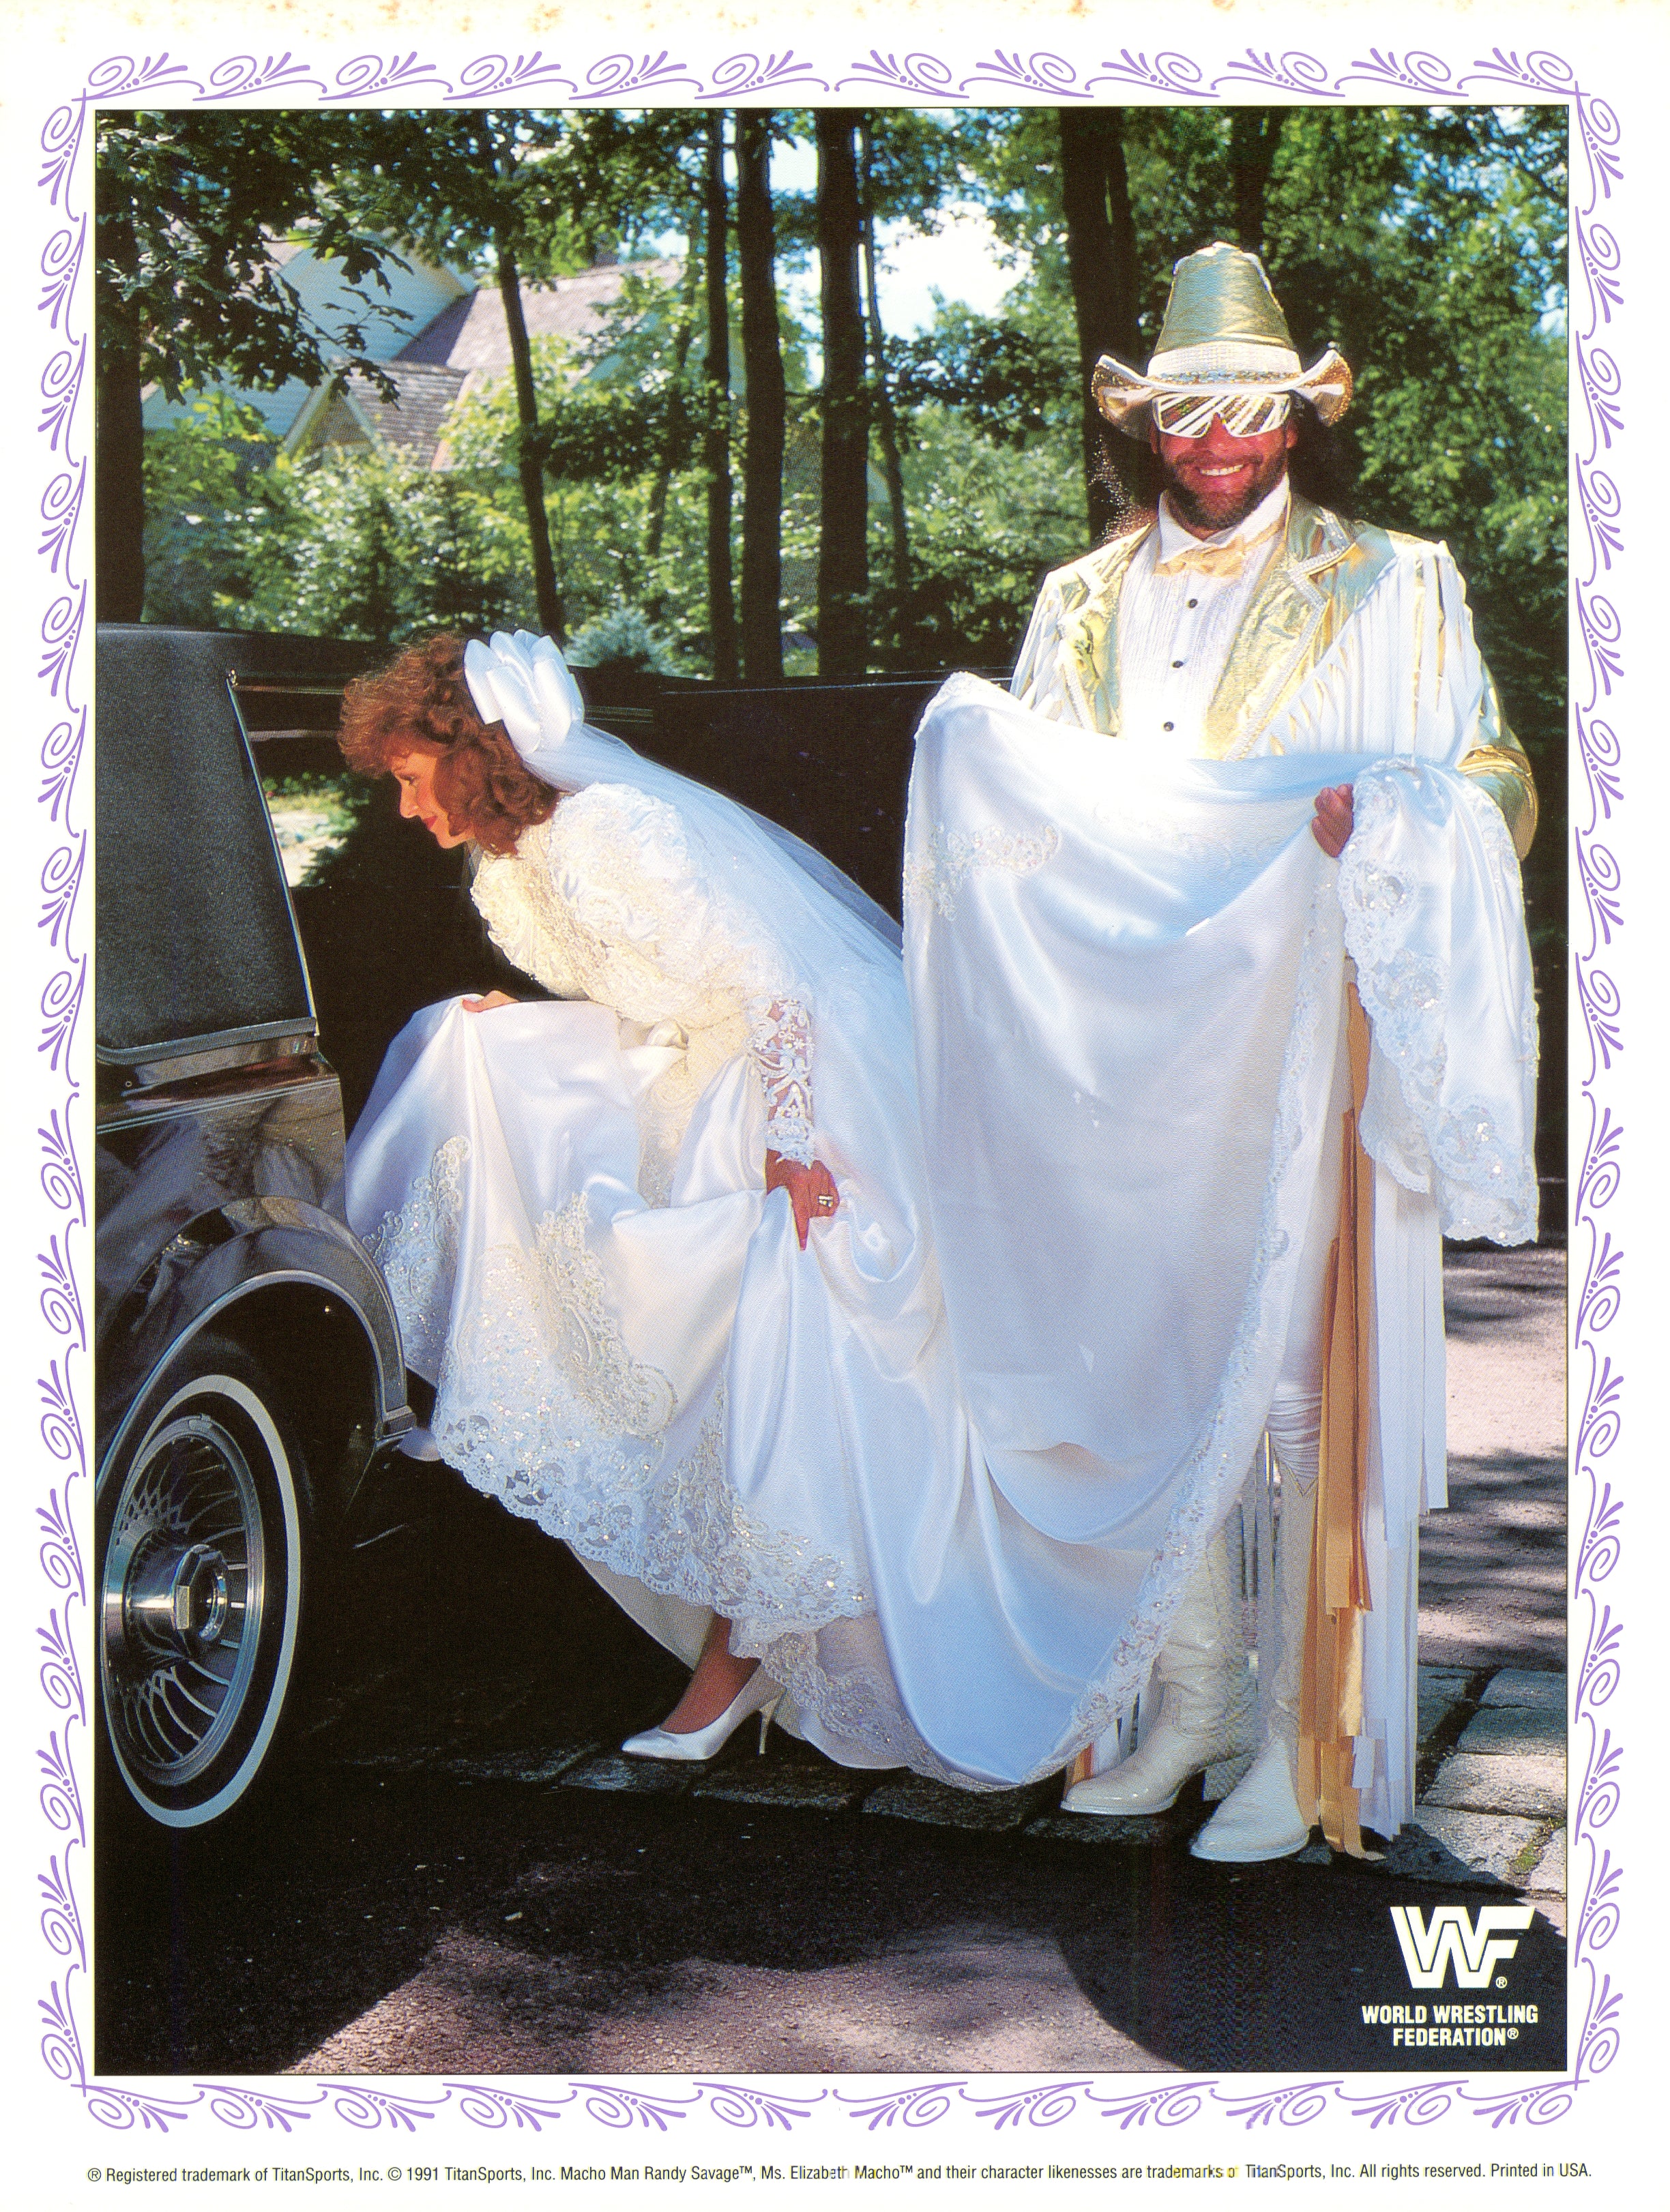 Randy Savage And Miss Elizabeth Wedding Photos